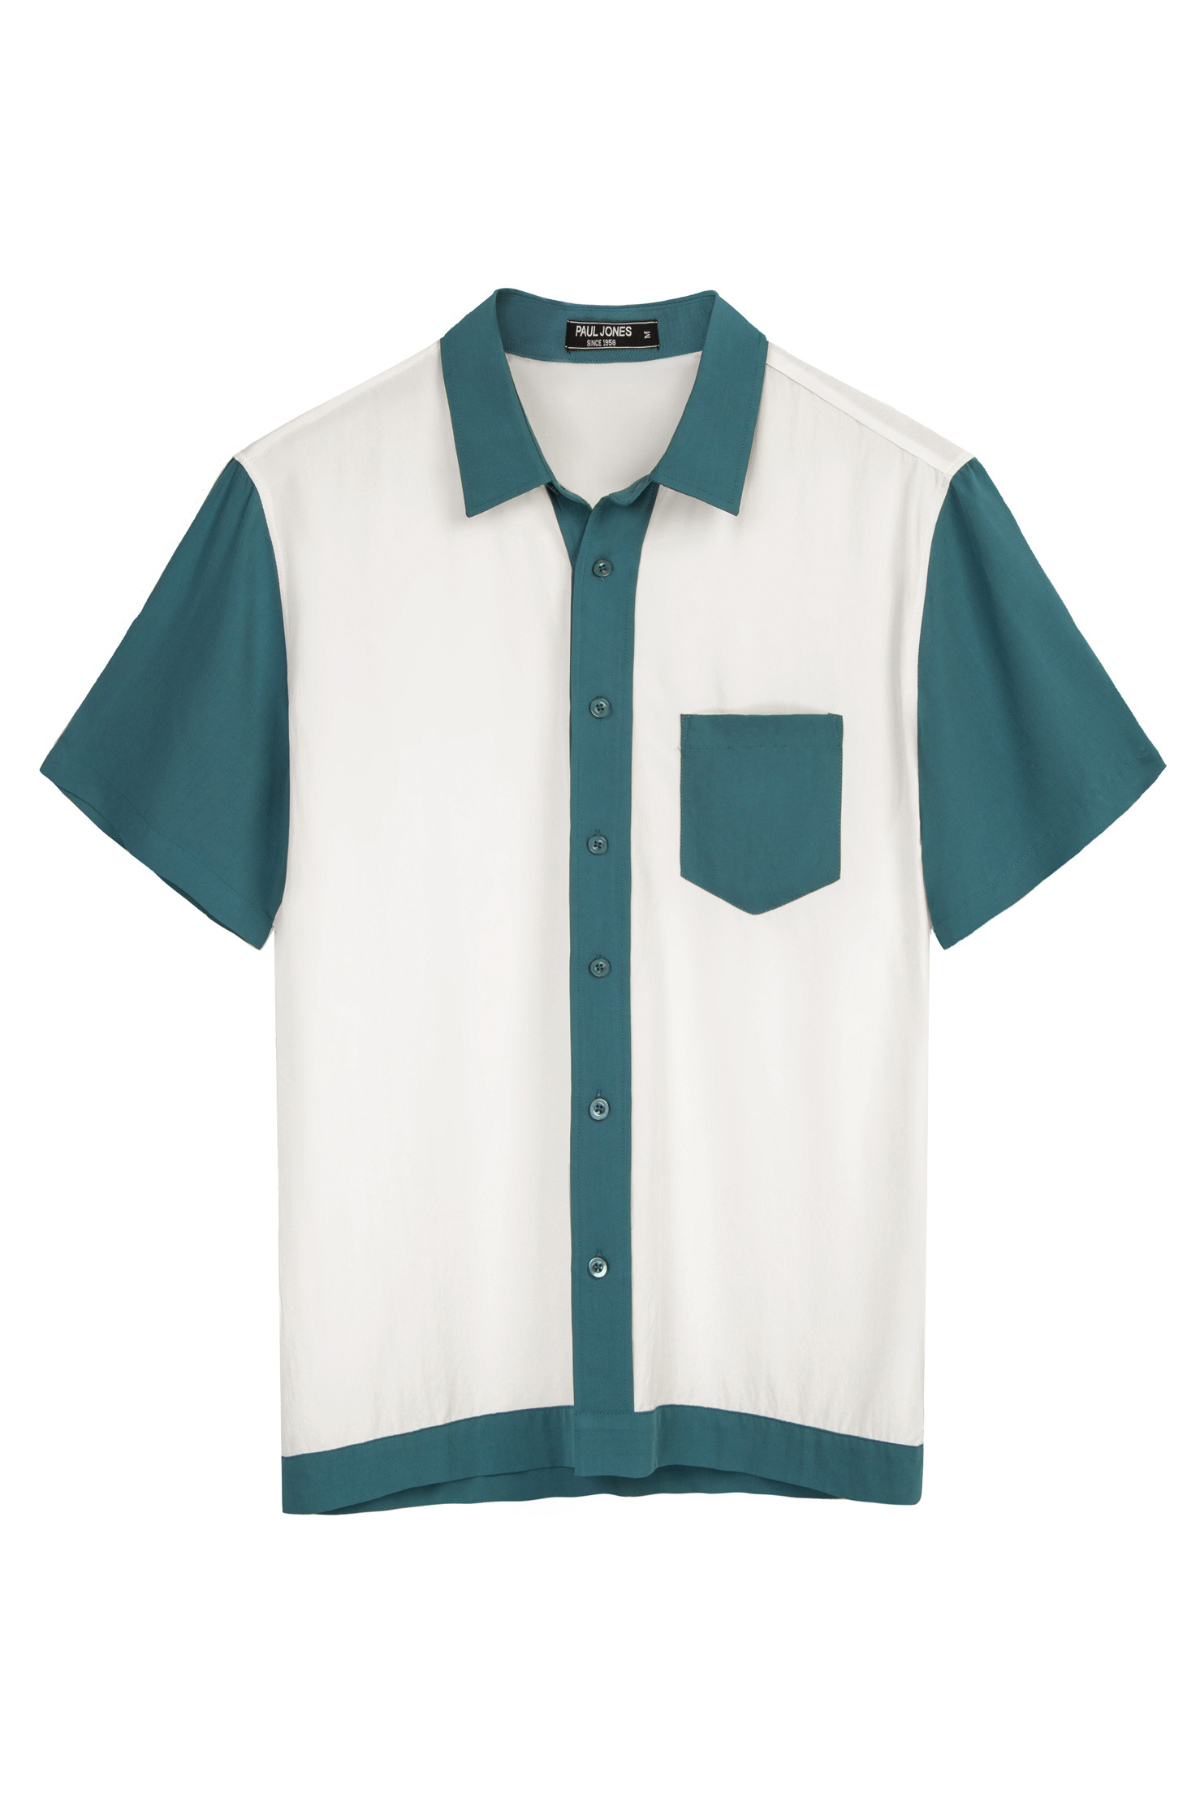 Down Summer Shirt Vintage Bowling PJ Contrast Jones Paul Button – Short Sleeve Men 70s